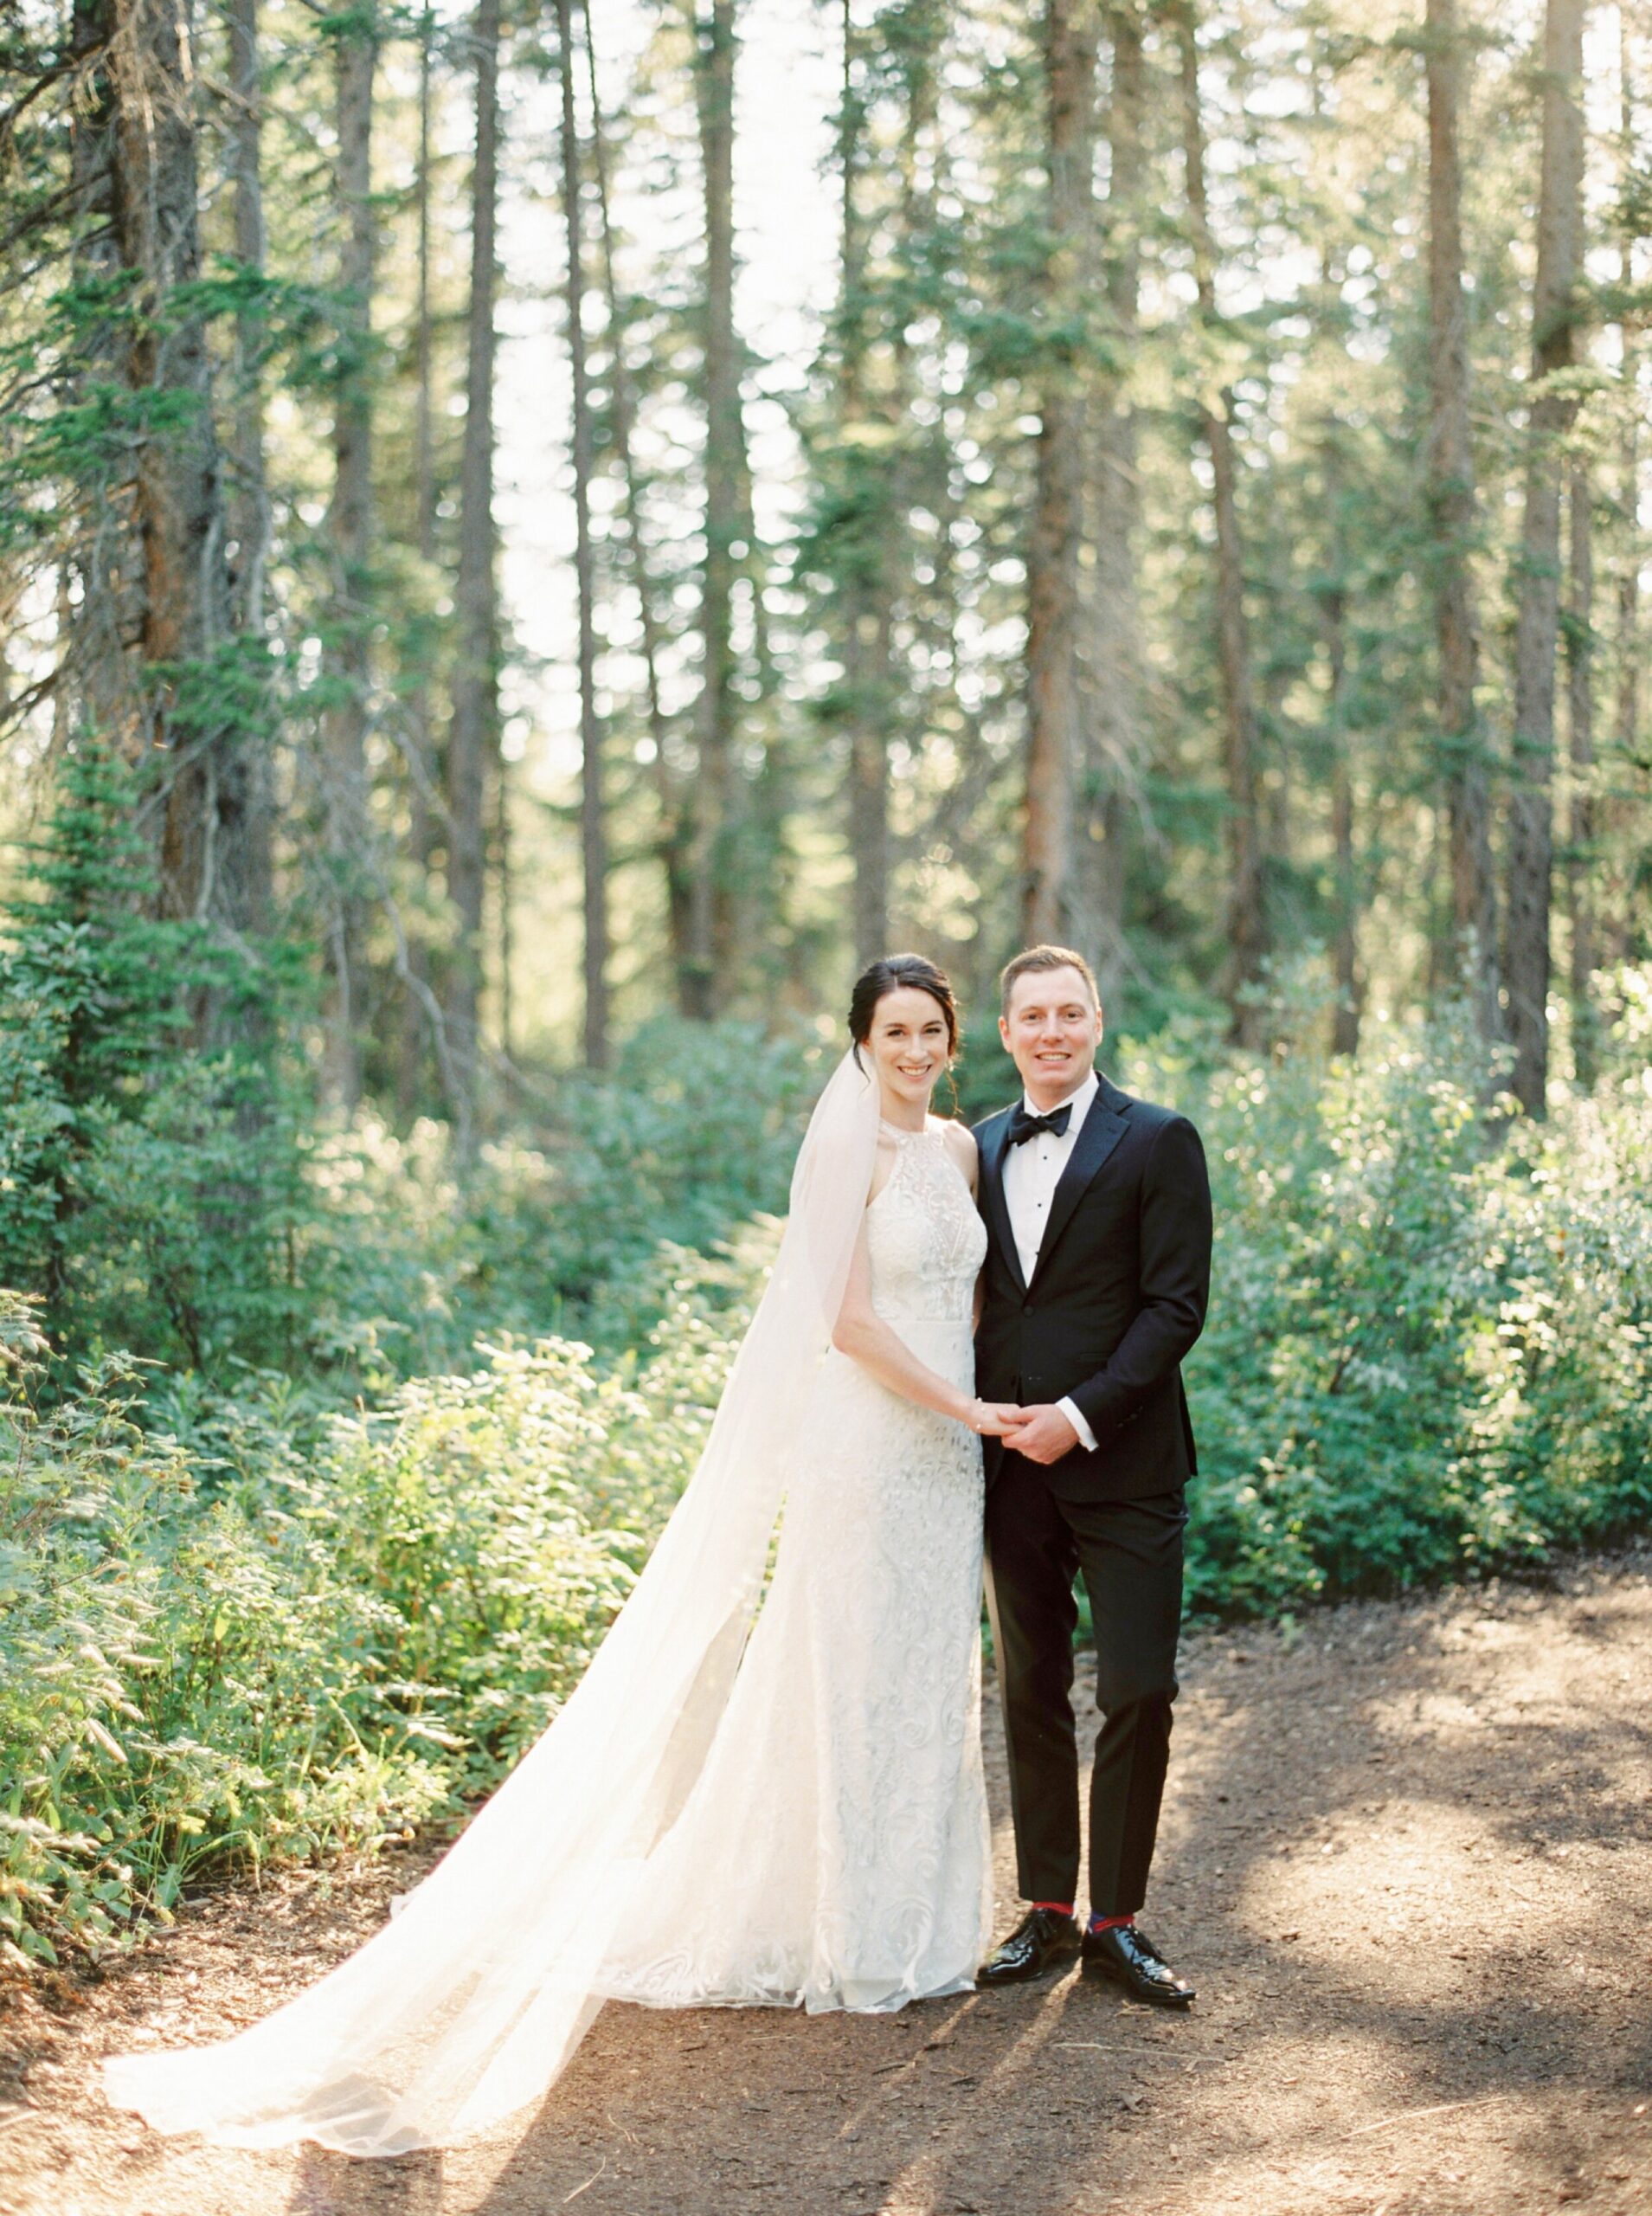  Bride and groom pose ideas | Calgary wedding photographers | griffith woods portrait session | fine art film photographer 